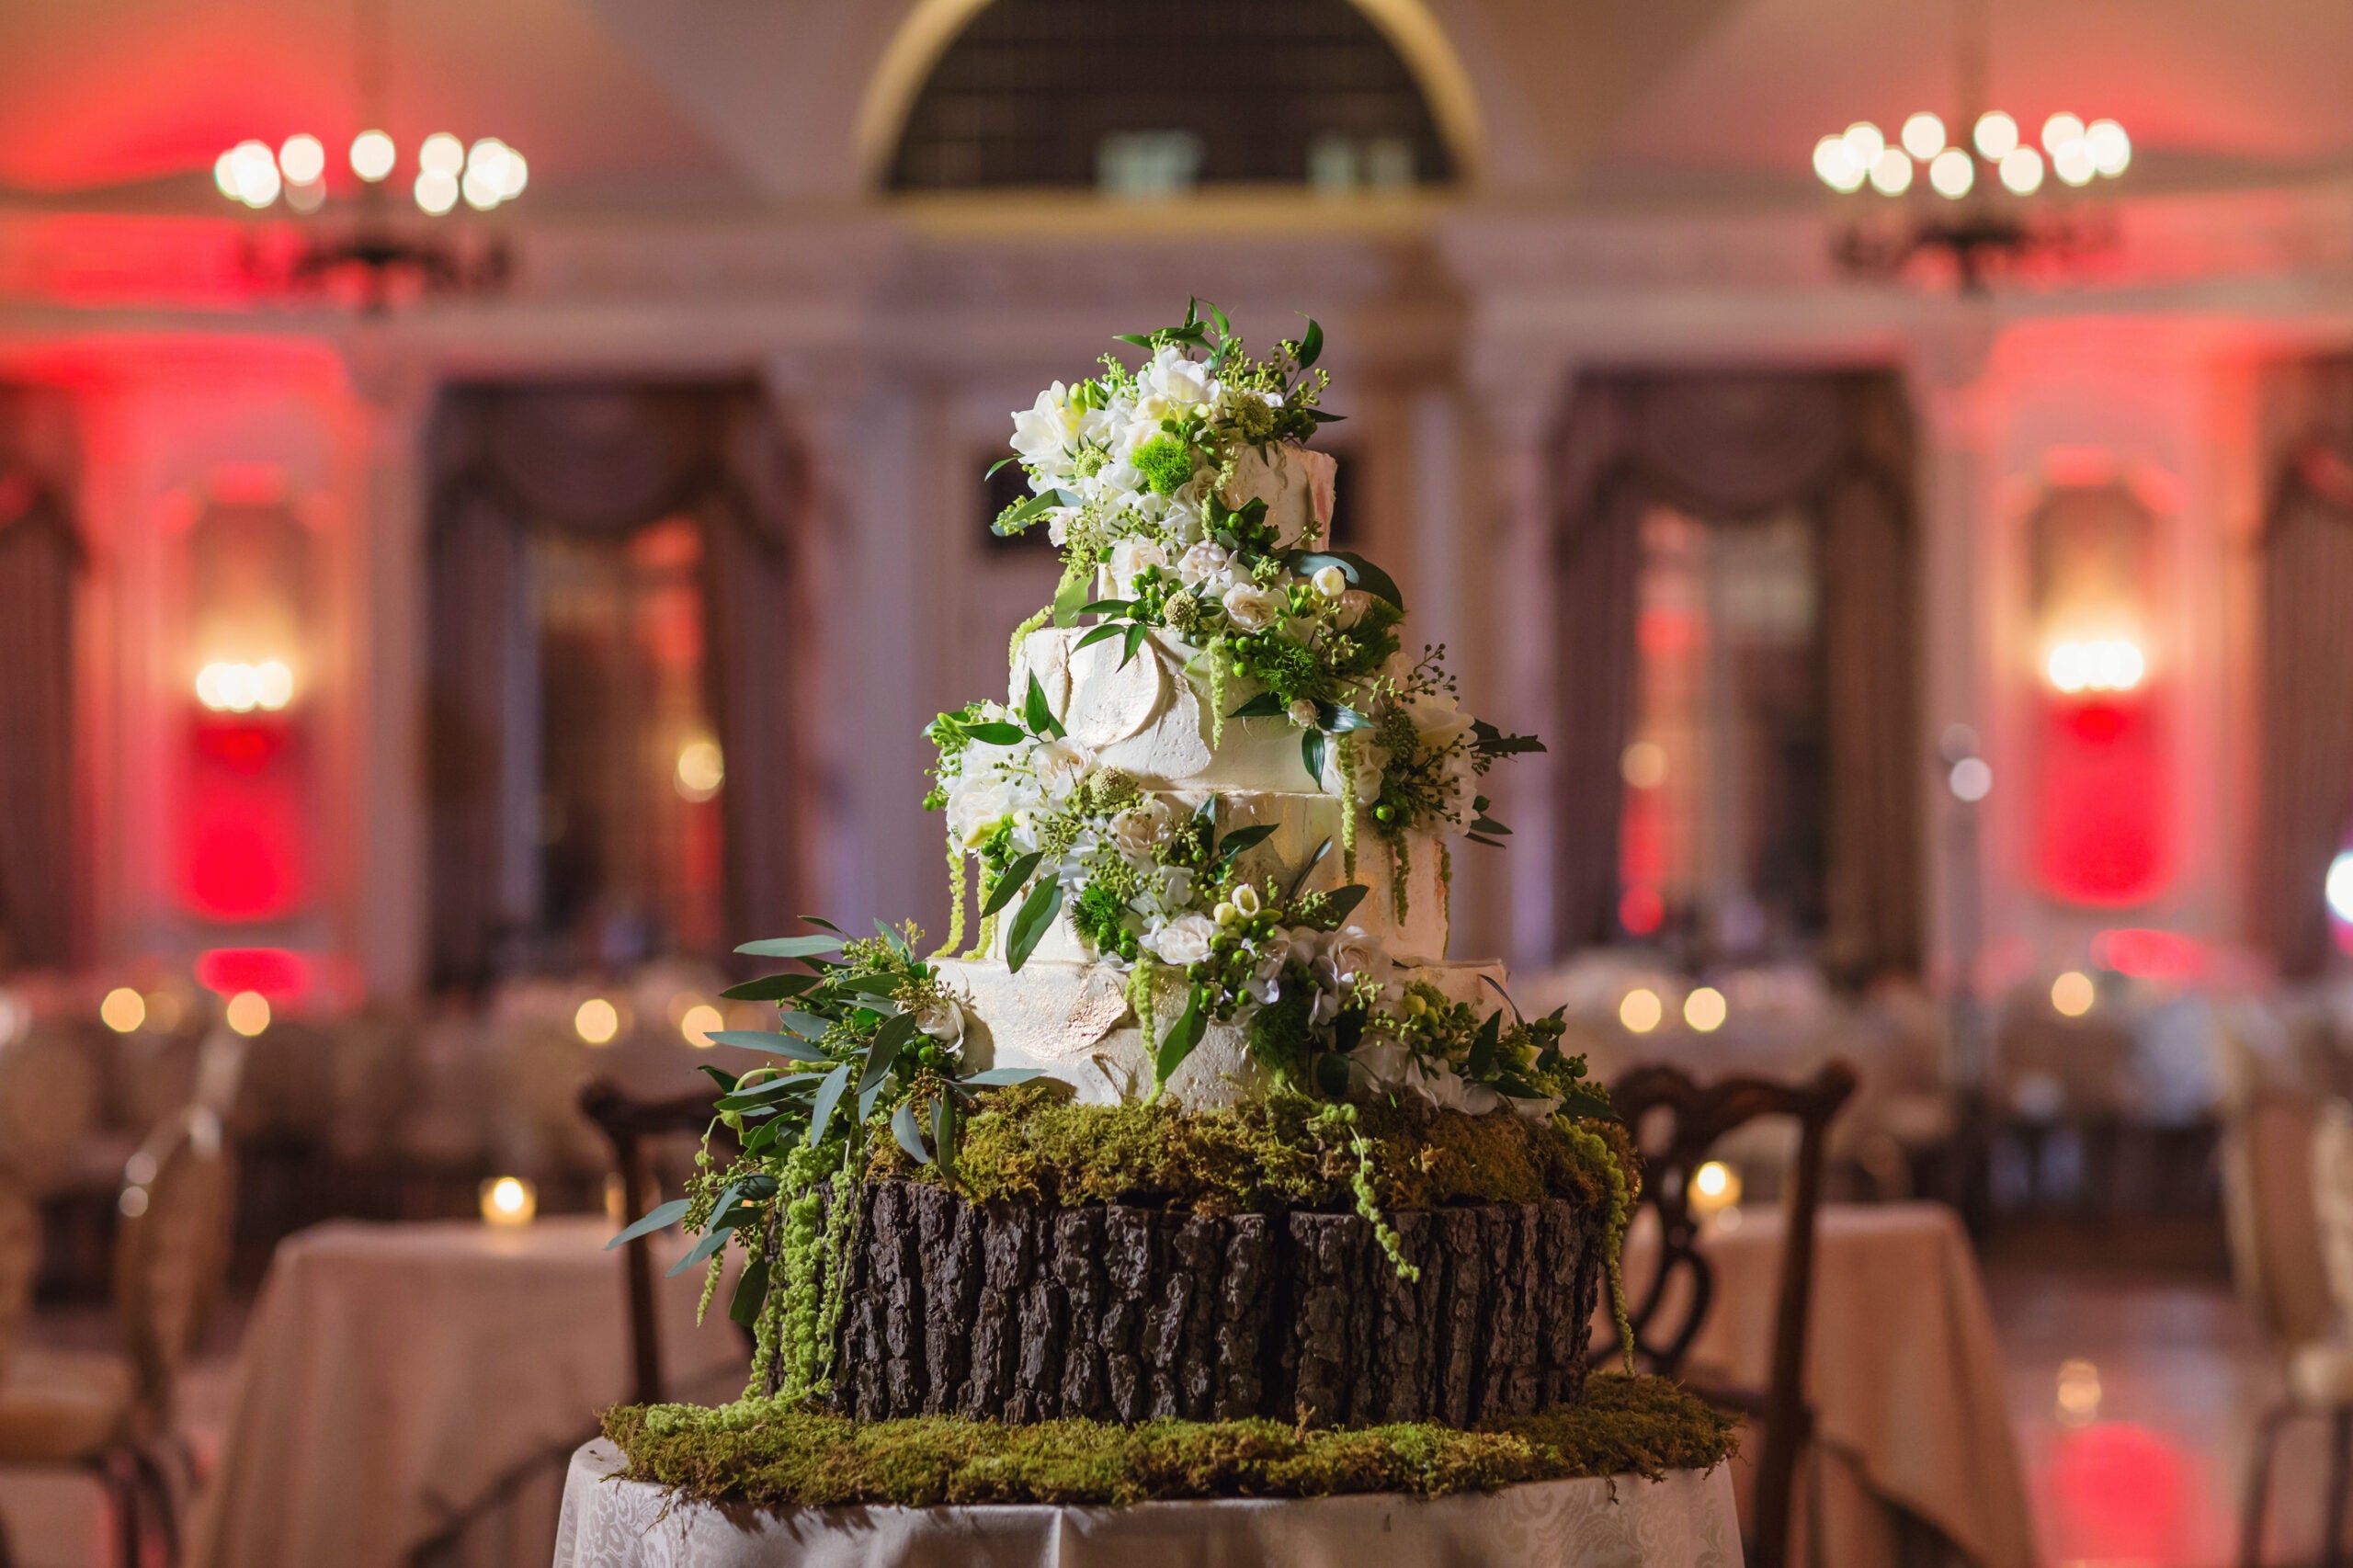 A stunning wedding cake.